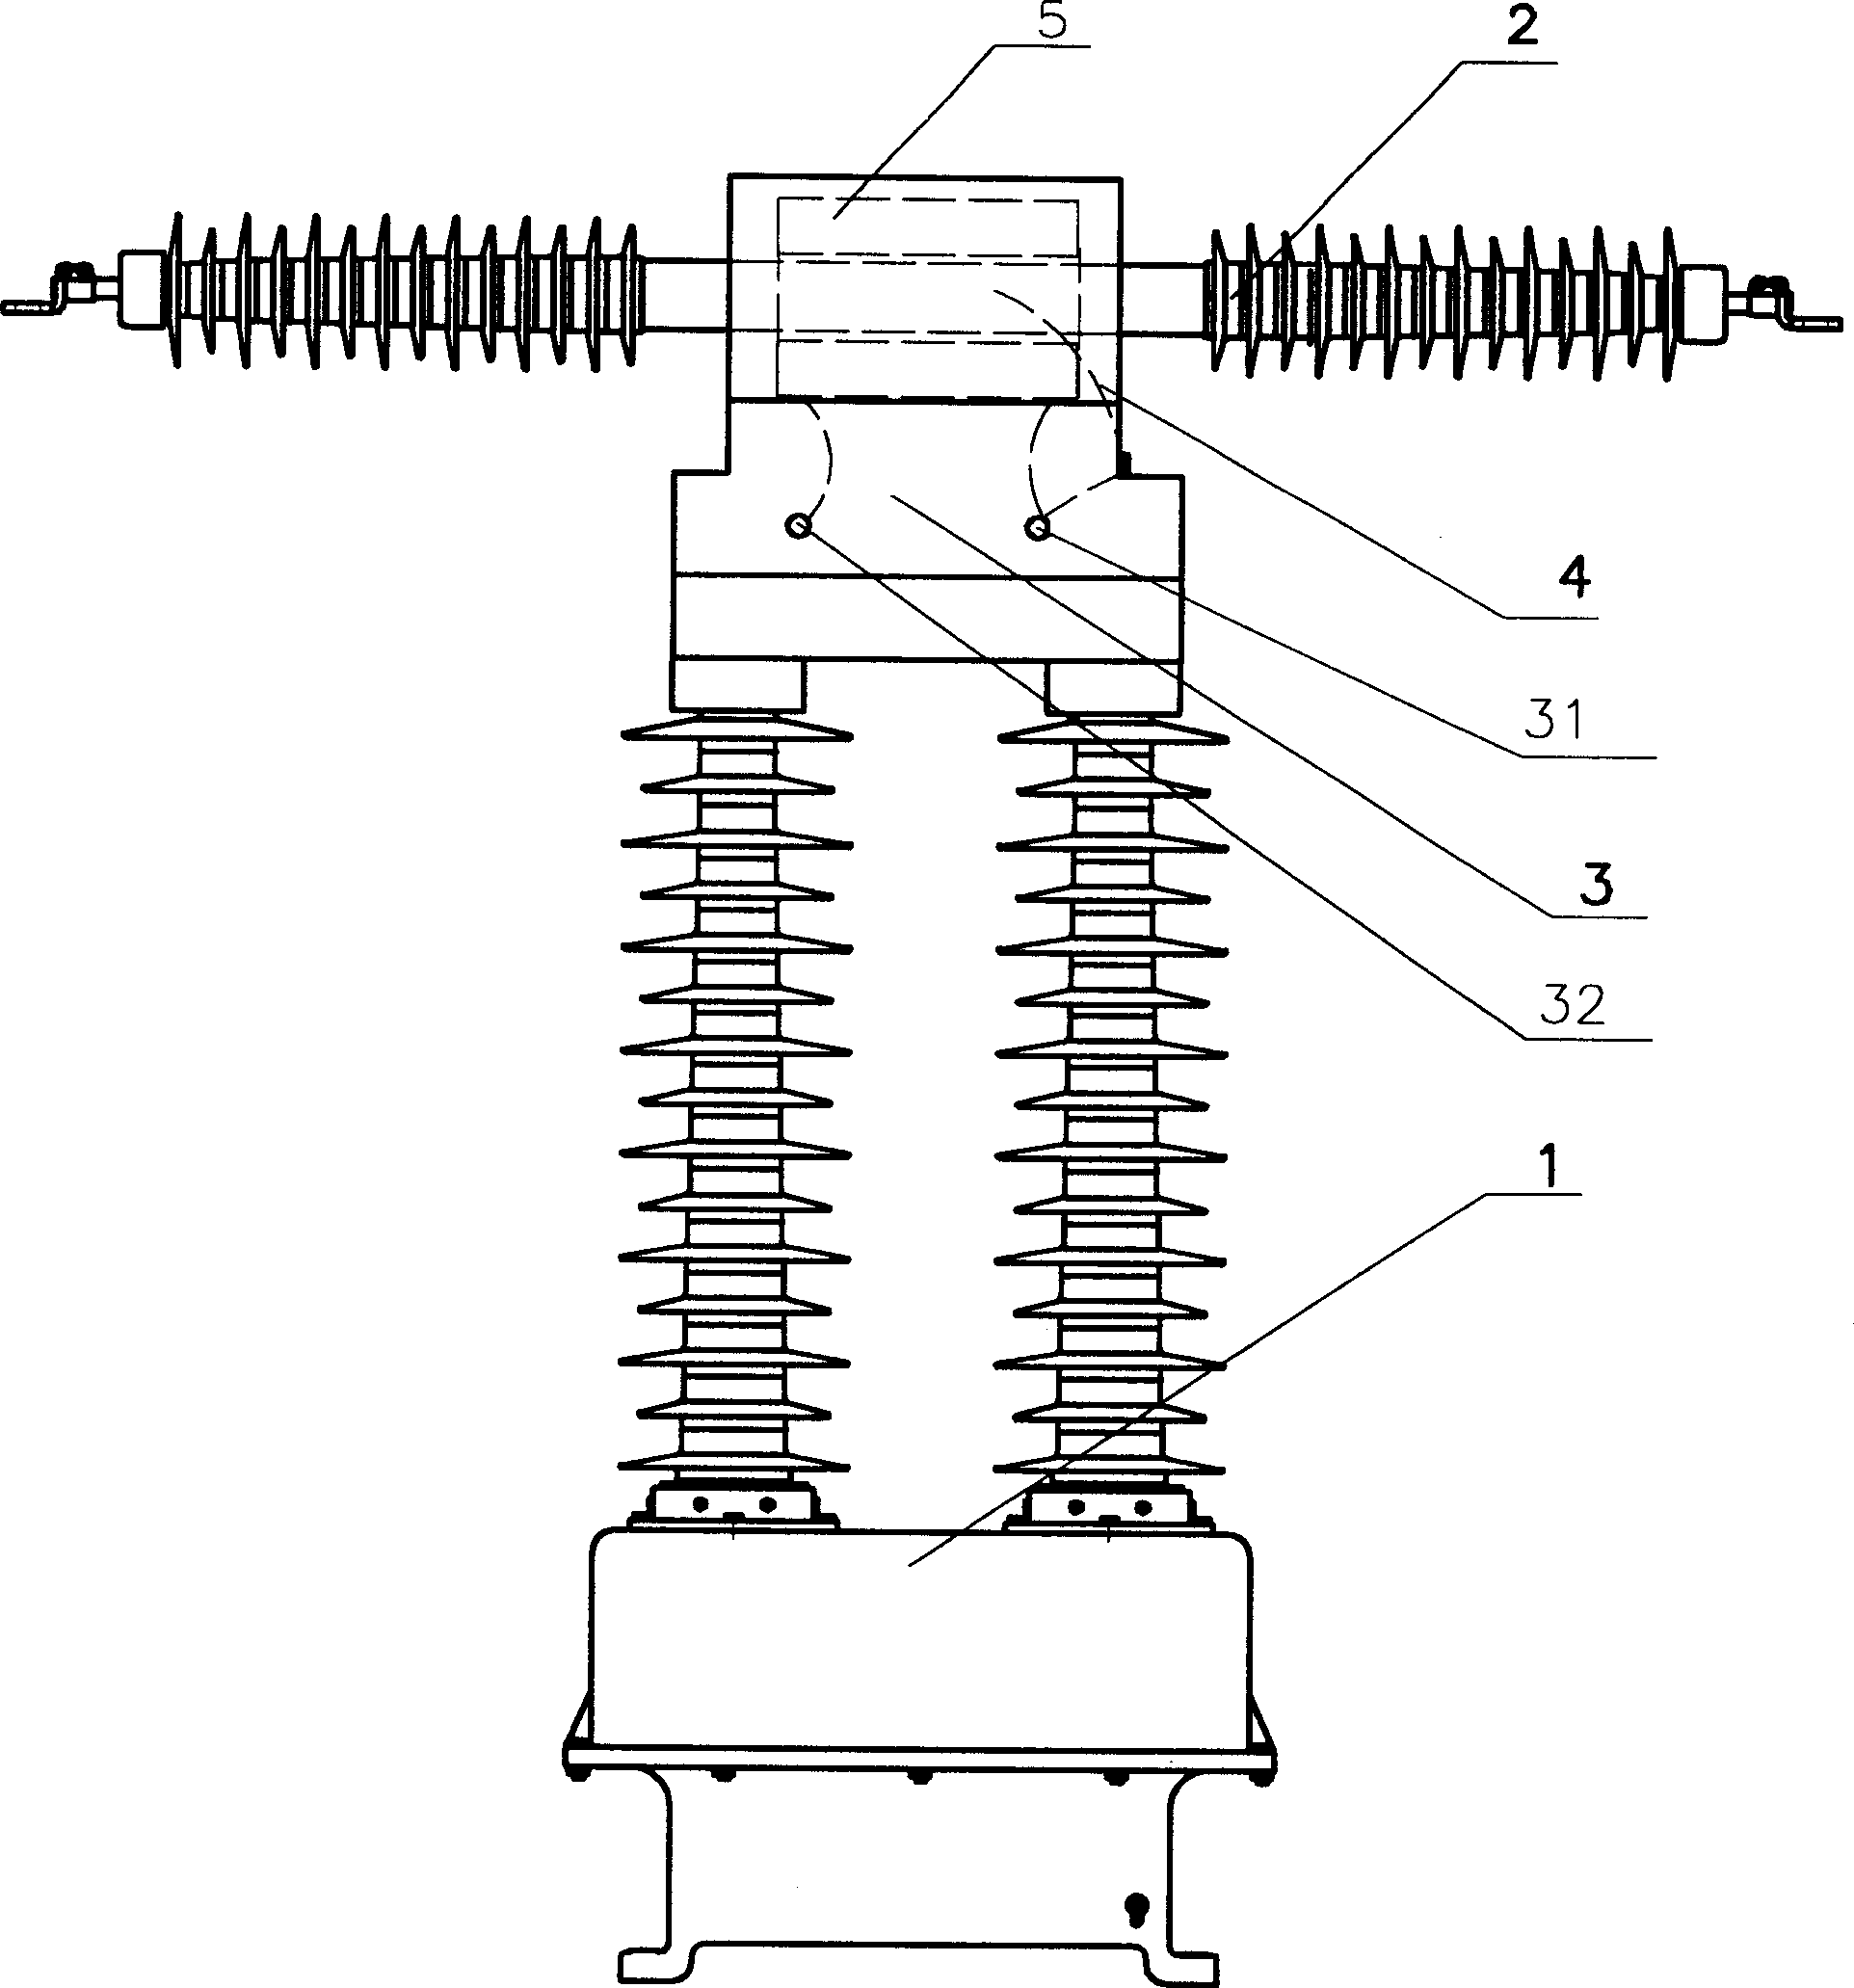 Assembled high-voltage current transformer